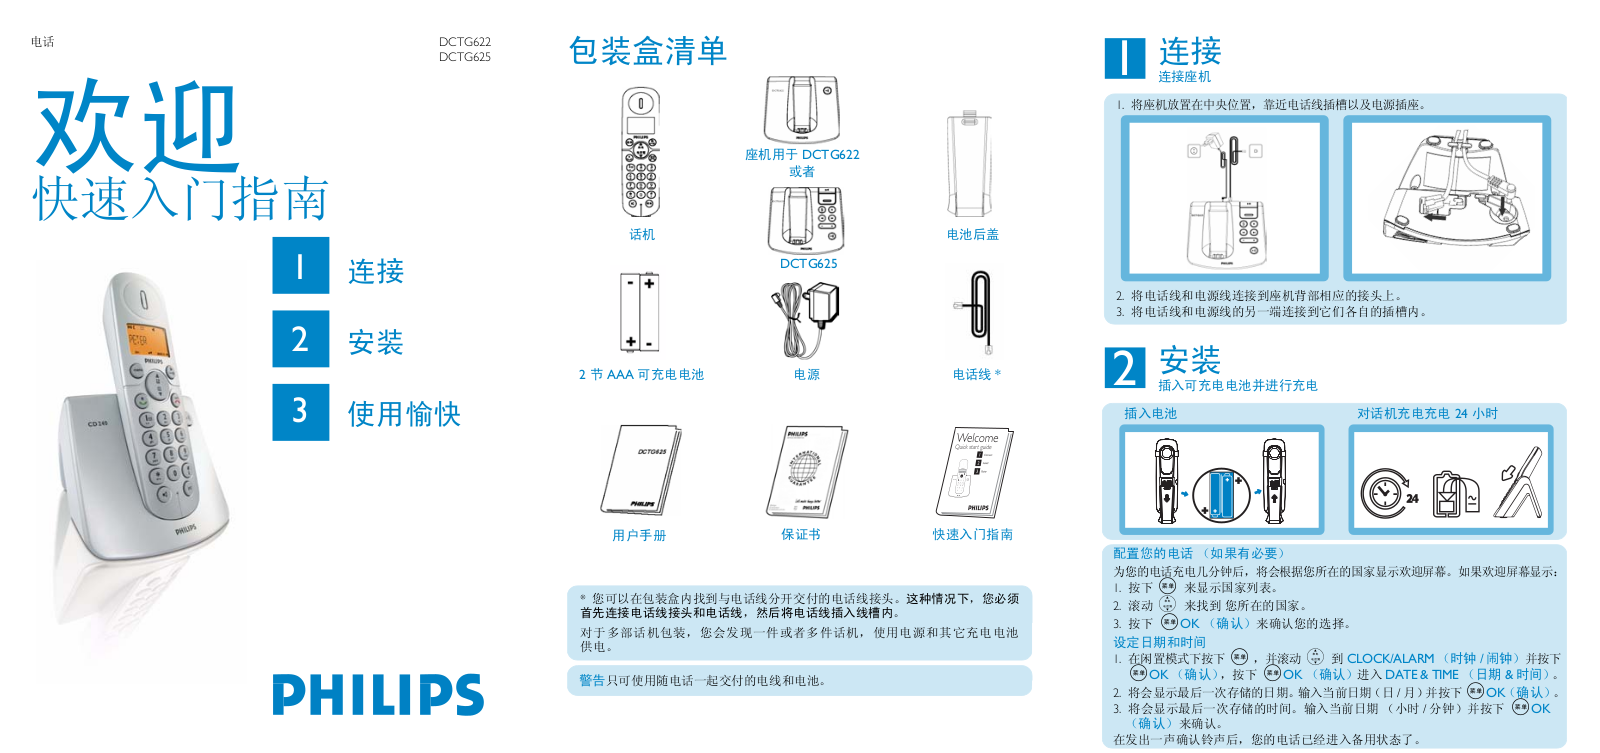 Philips DCTG622, DCTG625 User Guide